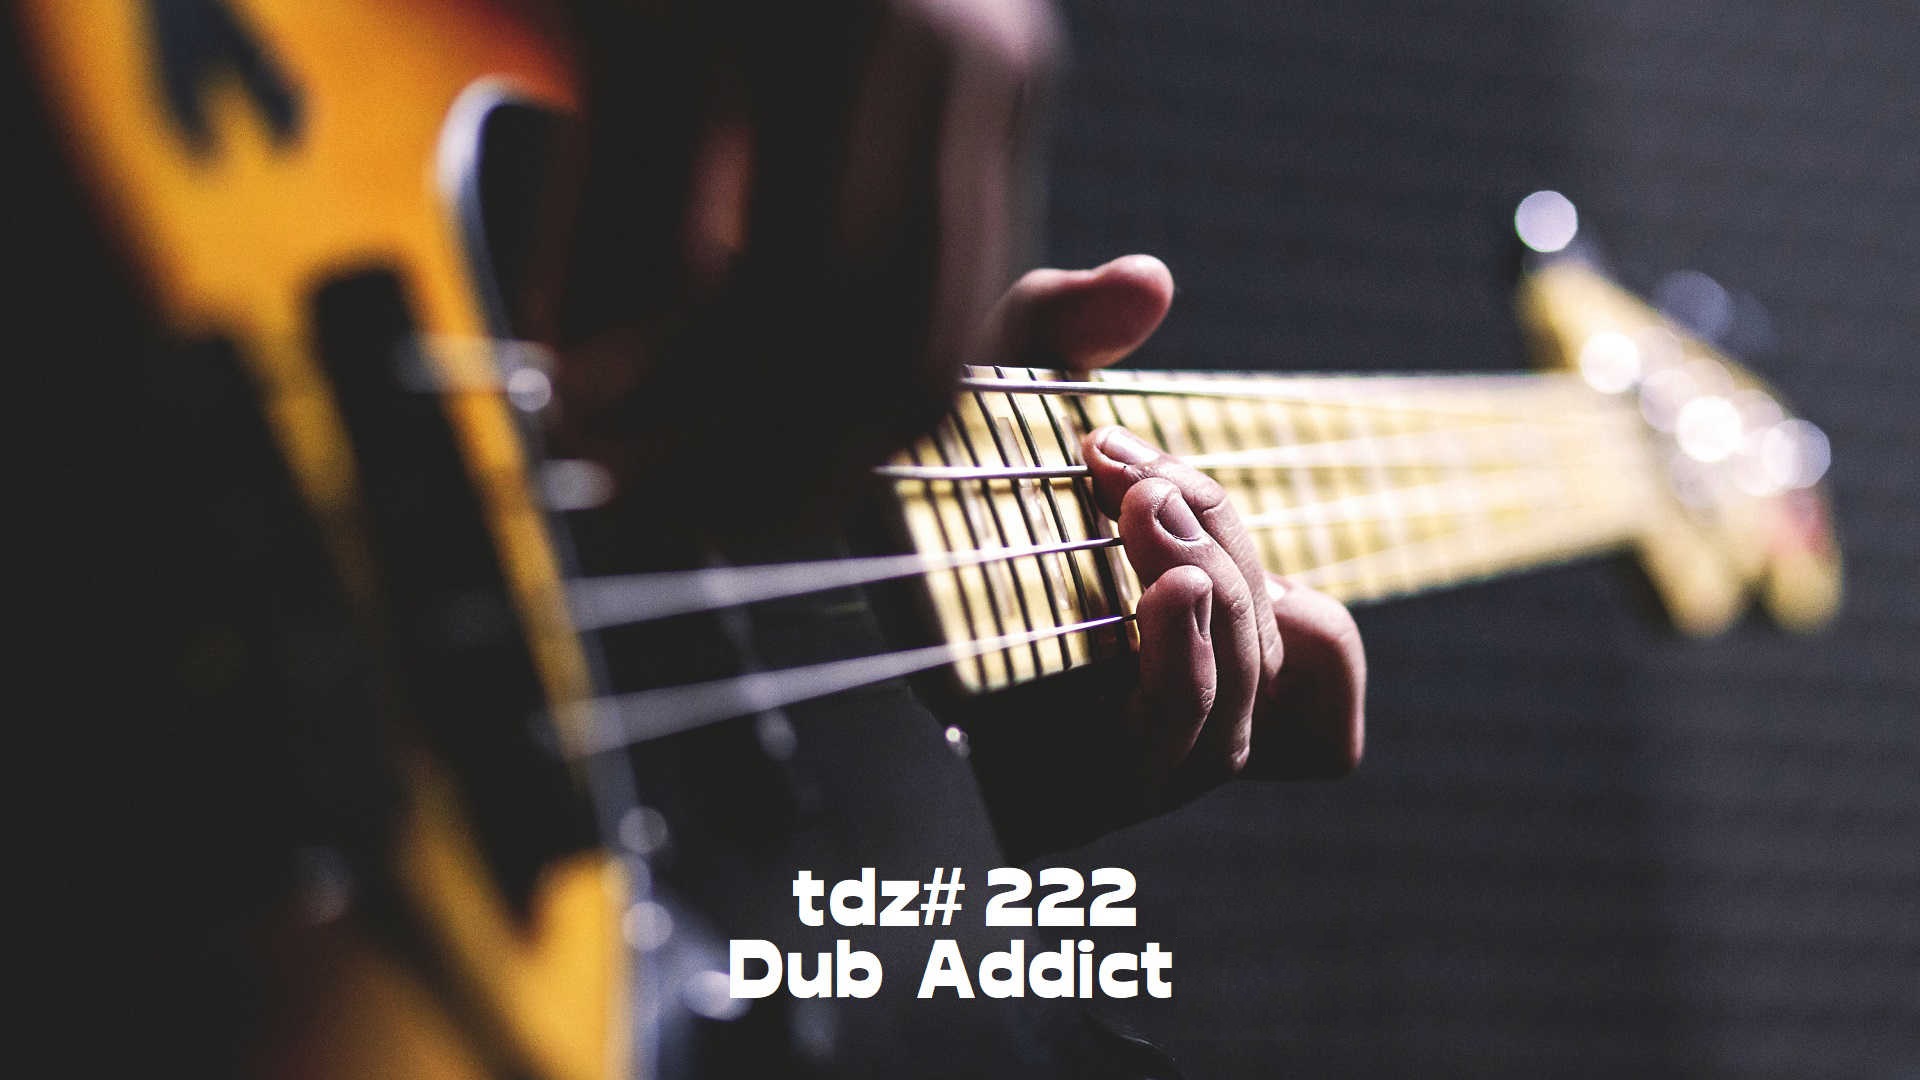 TDZ#222... Dub Addict.....